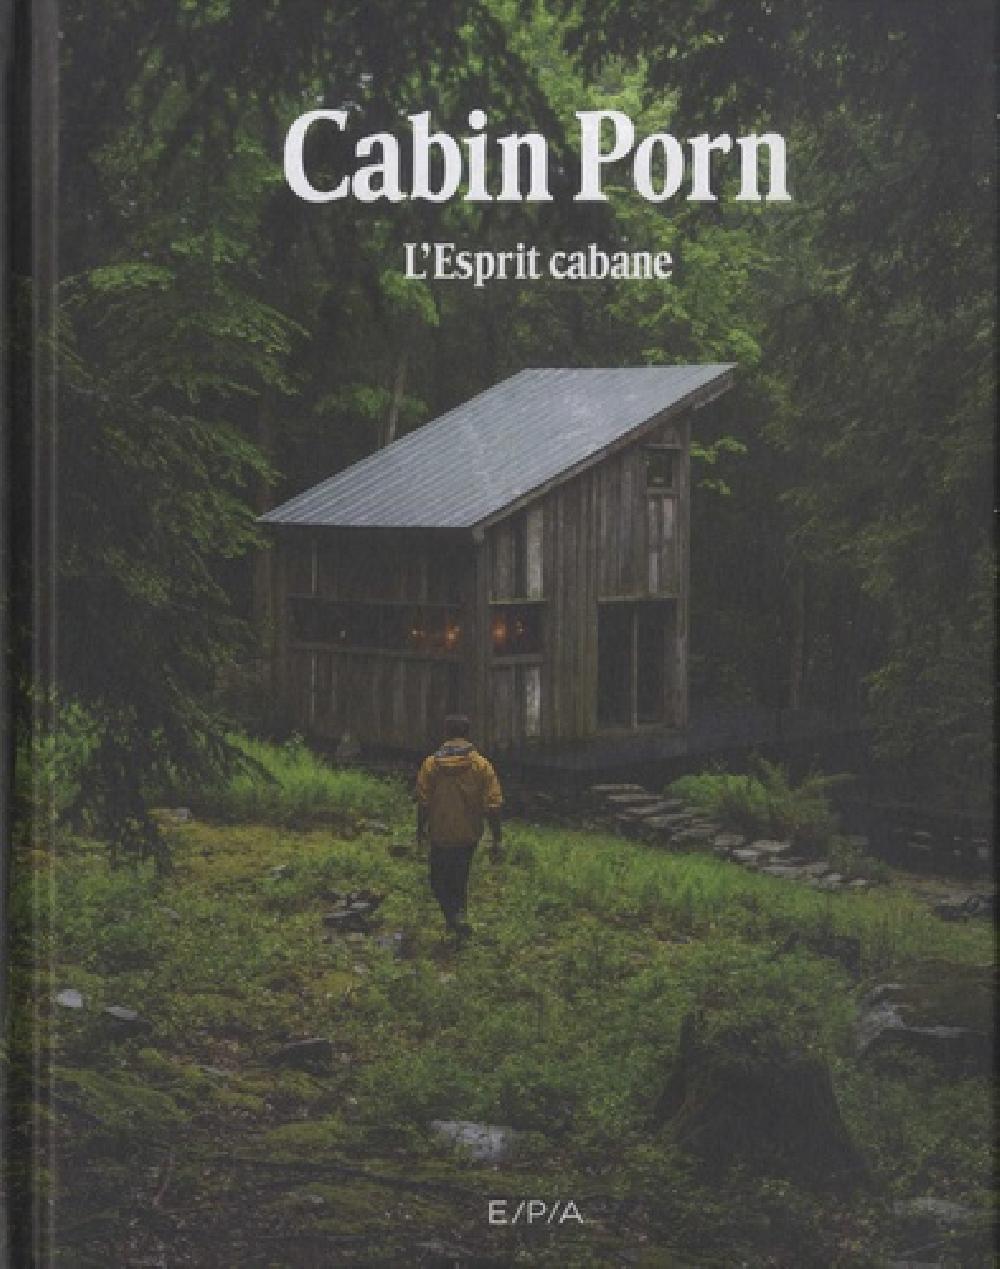 Cabin porn - Esprit cabane